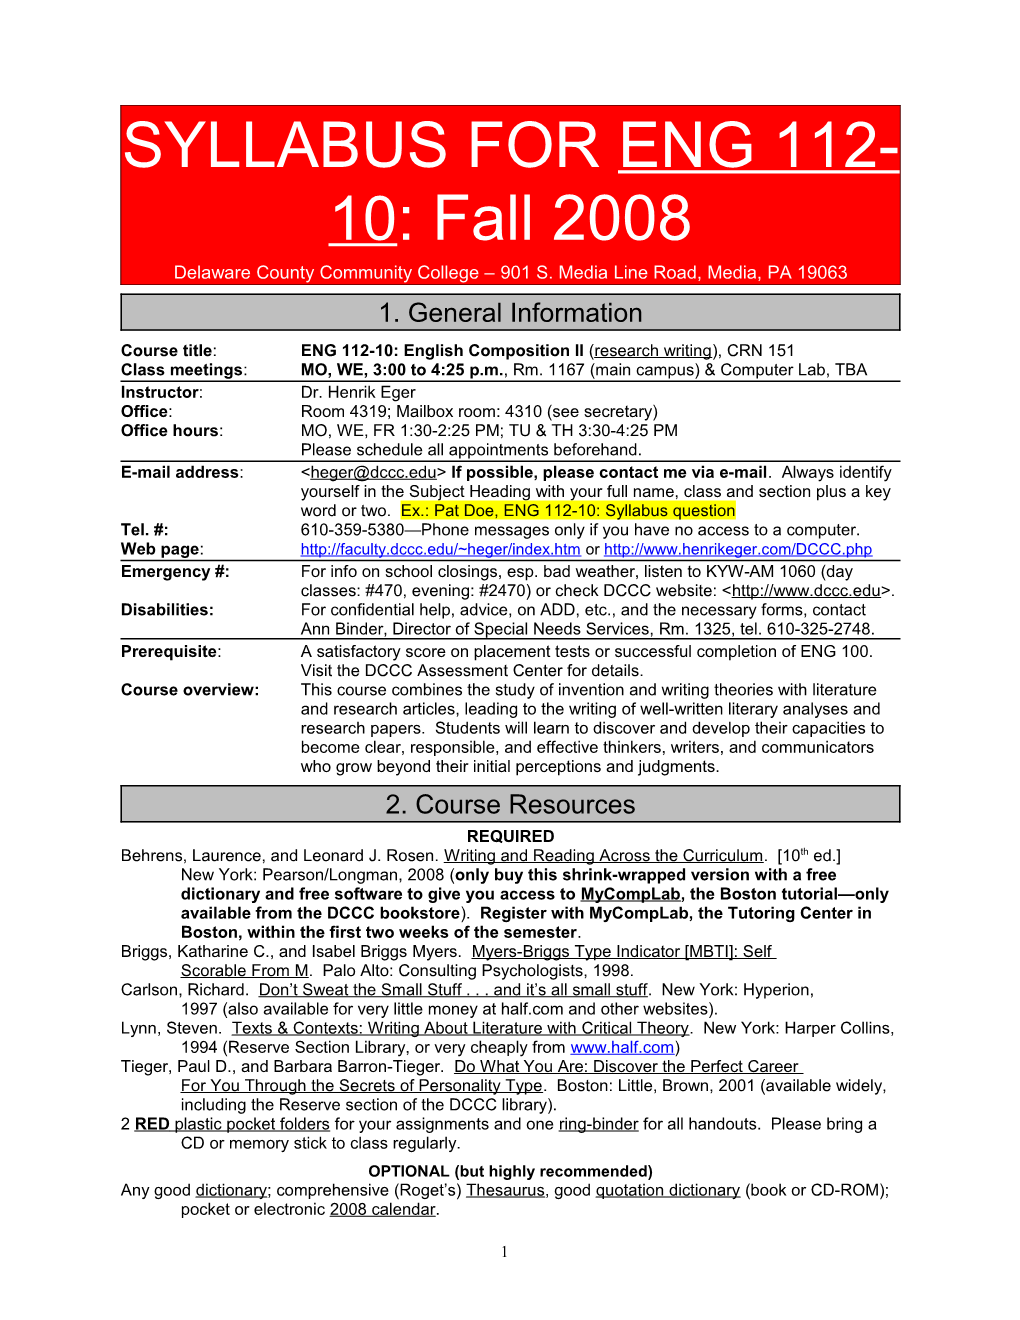 SYLLABUS for ENGLISH 100-24: Fall 2005